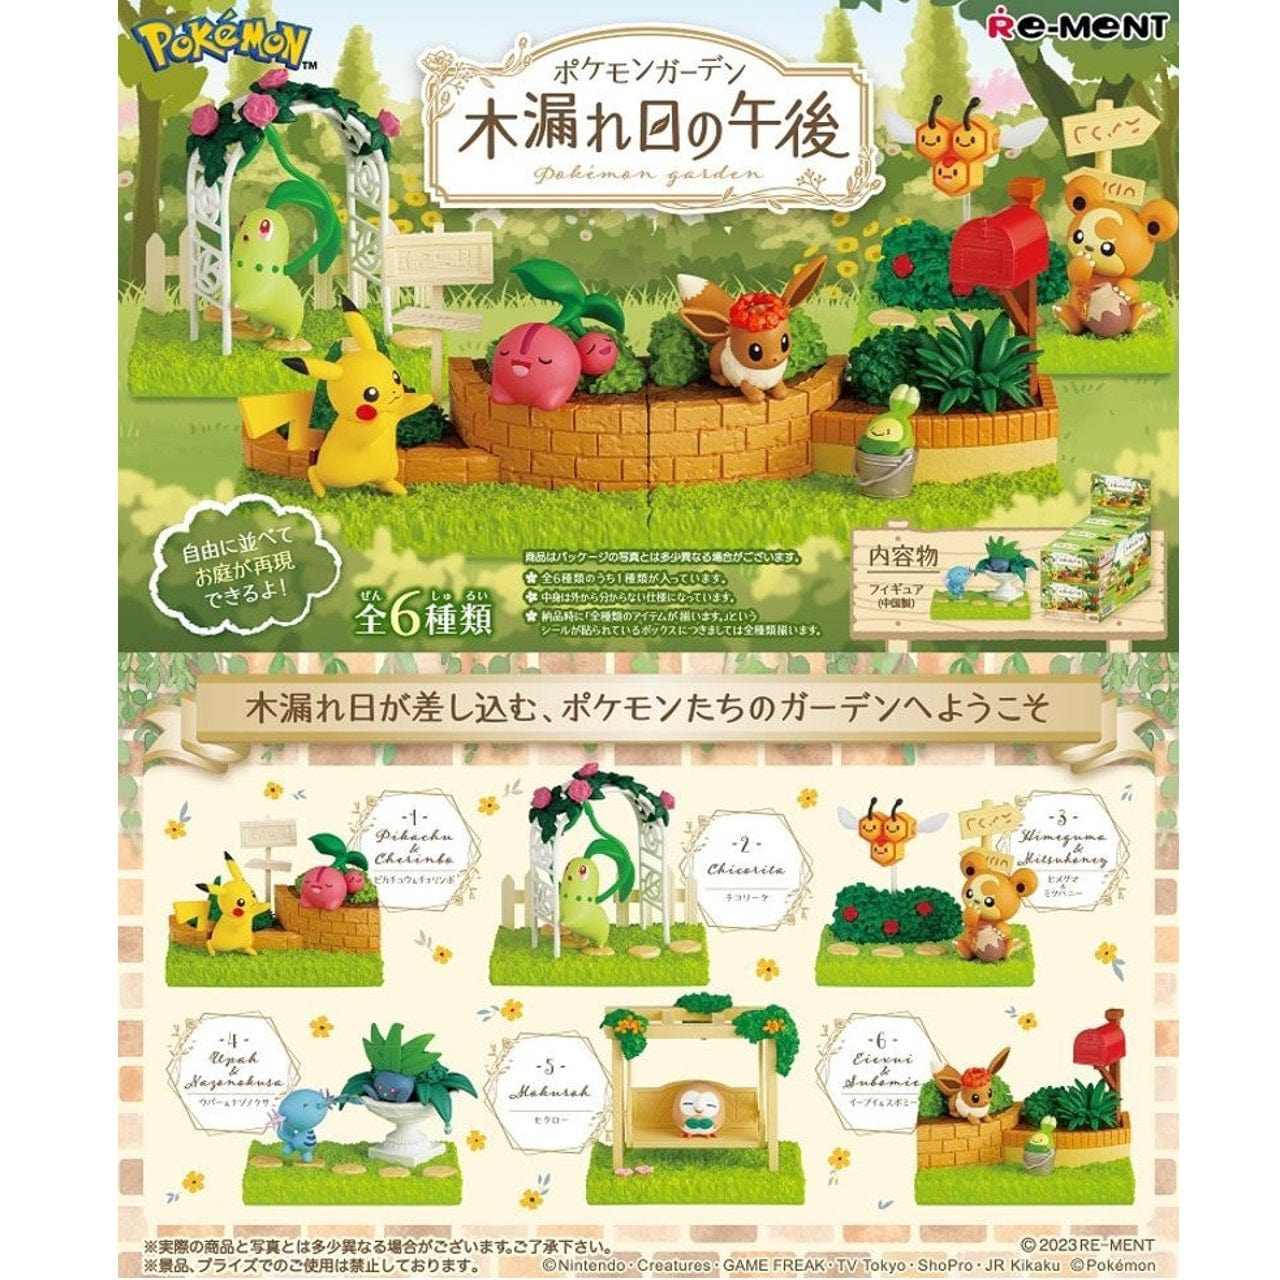 JBK Rement Pokemon Garden Afternoon Sunlight Through Trees Surprise Box Kawaii Gifts 4521121207230